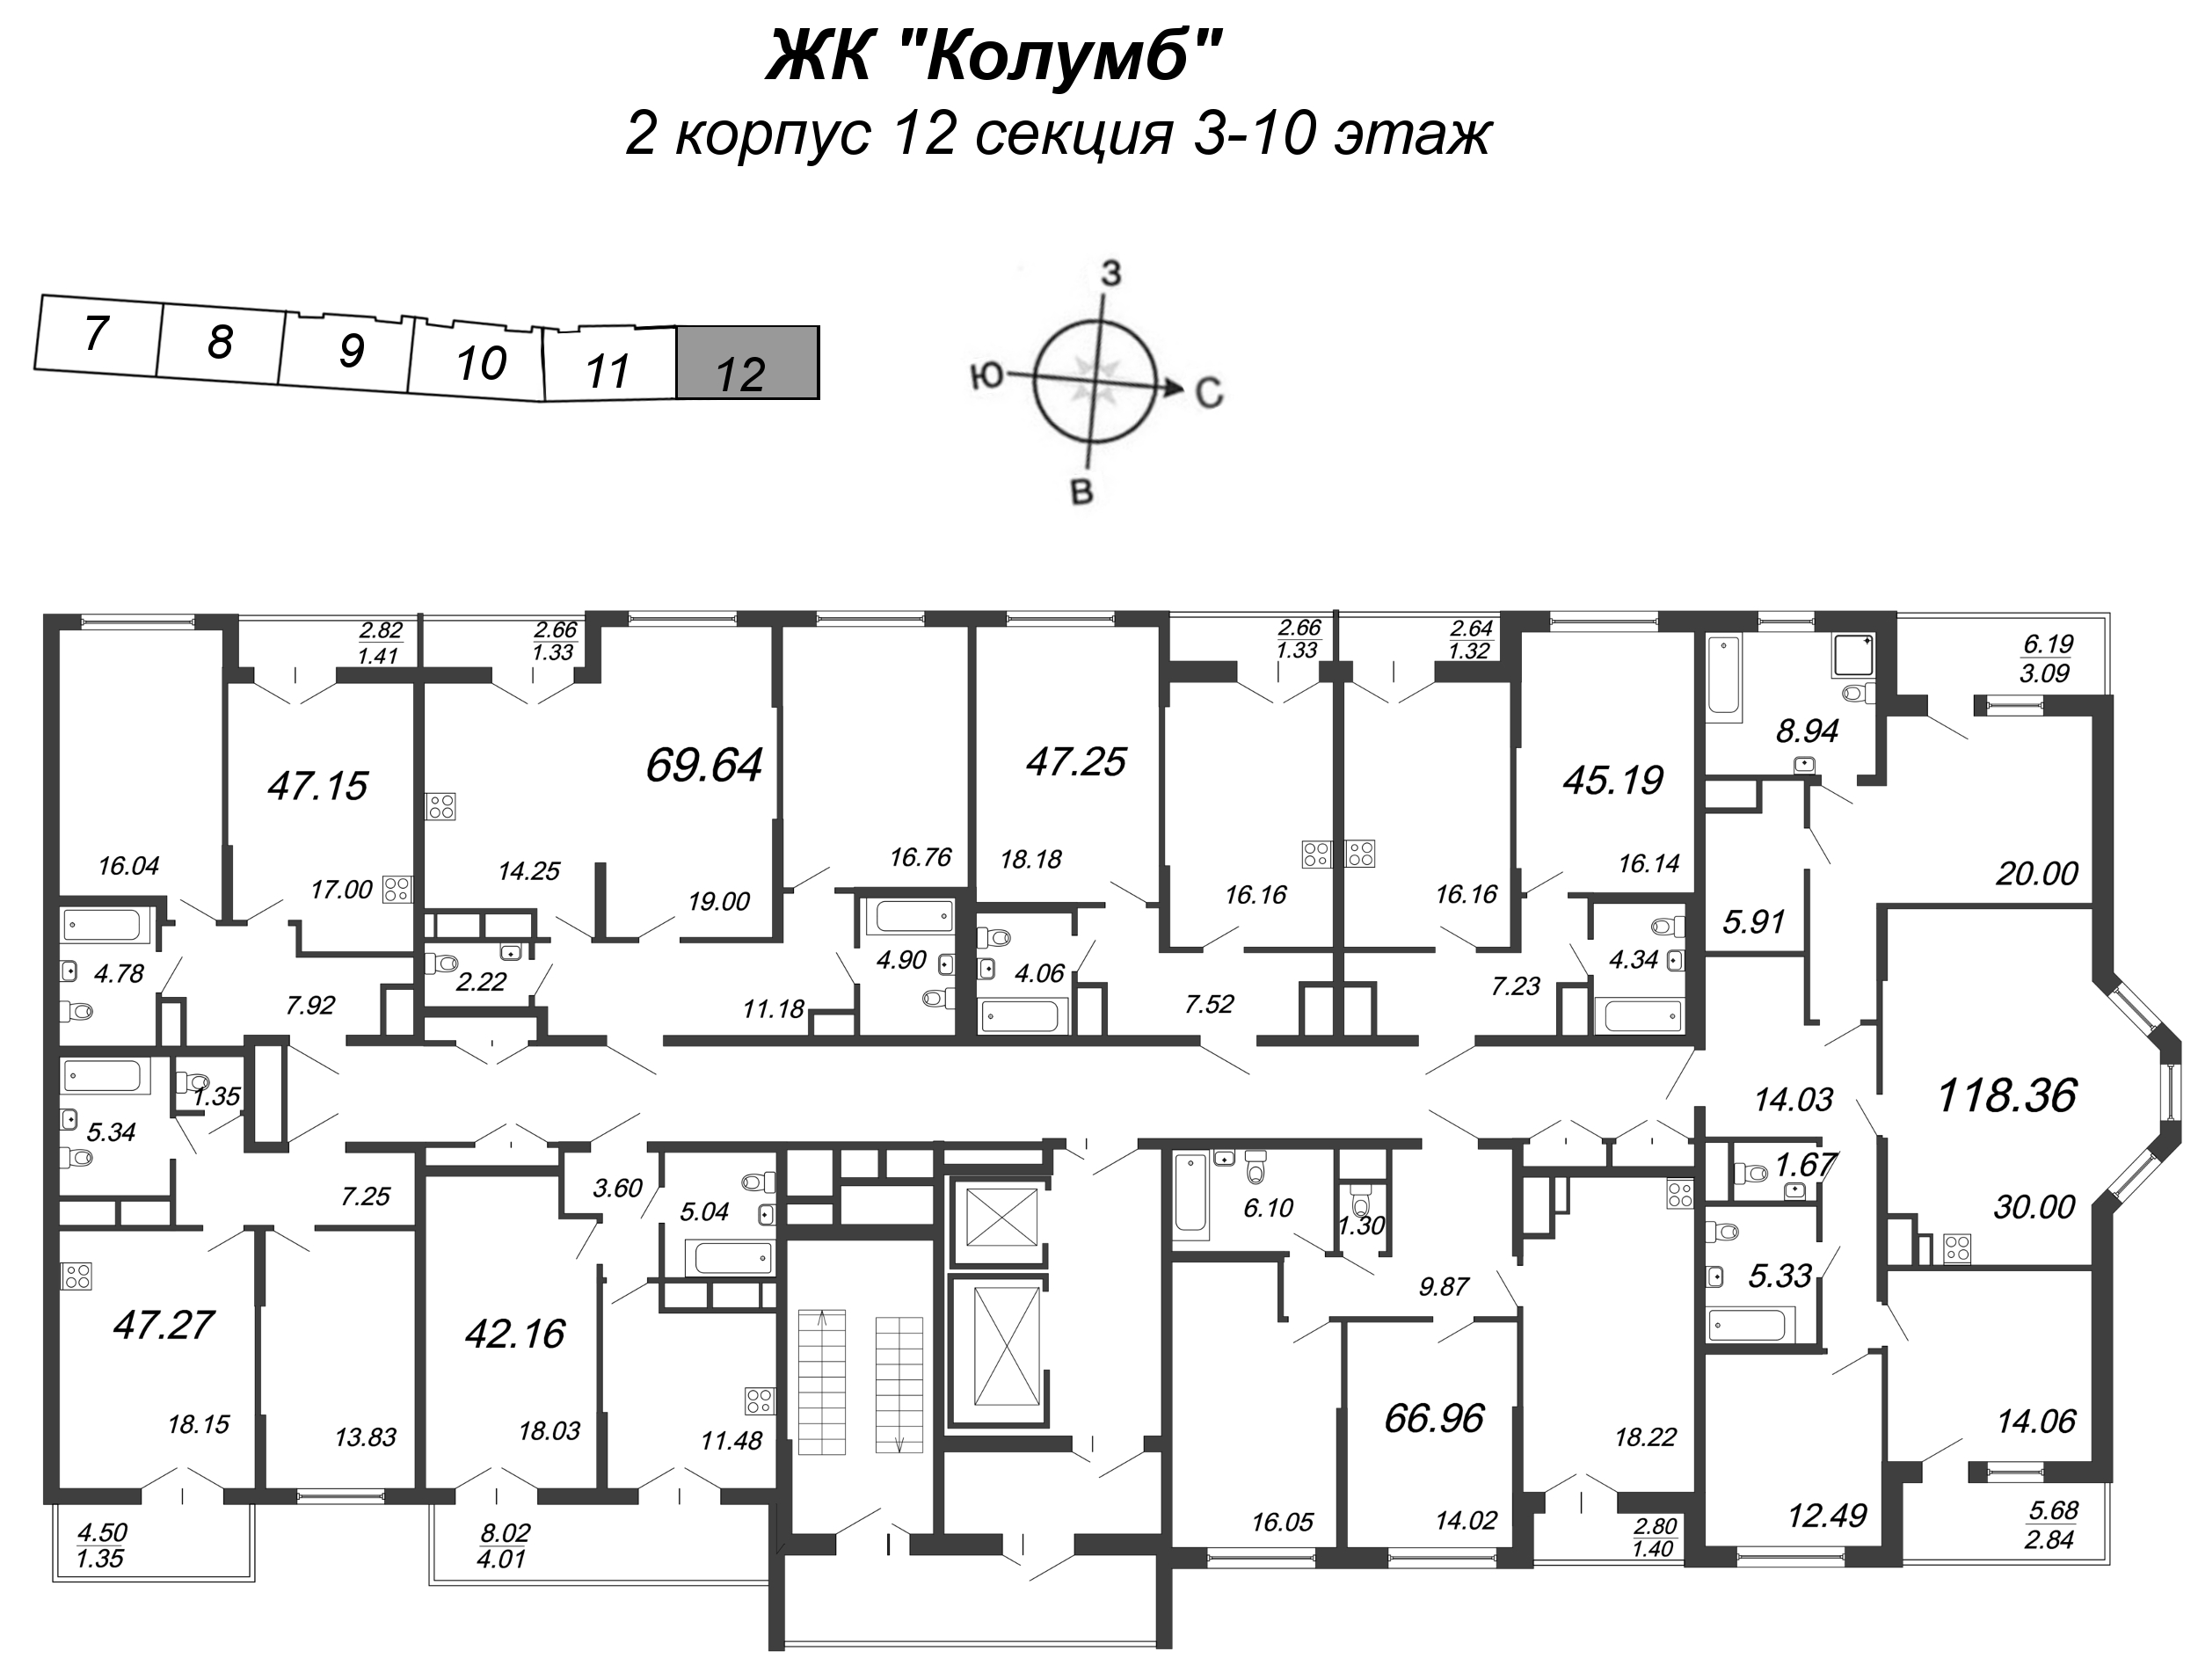 4-комнатная (Евро) квартира, 118.7 м² - планировка этажа